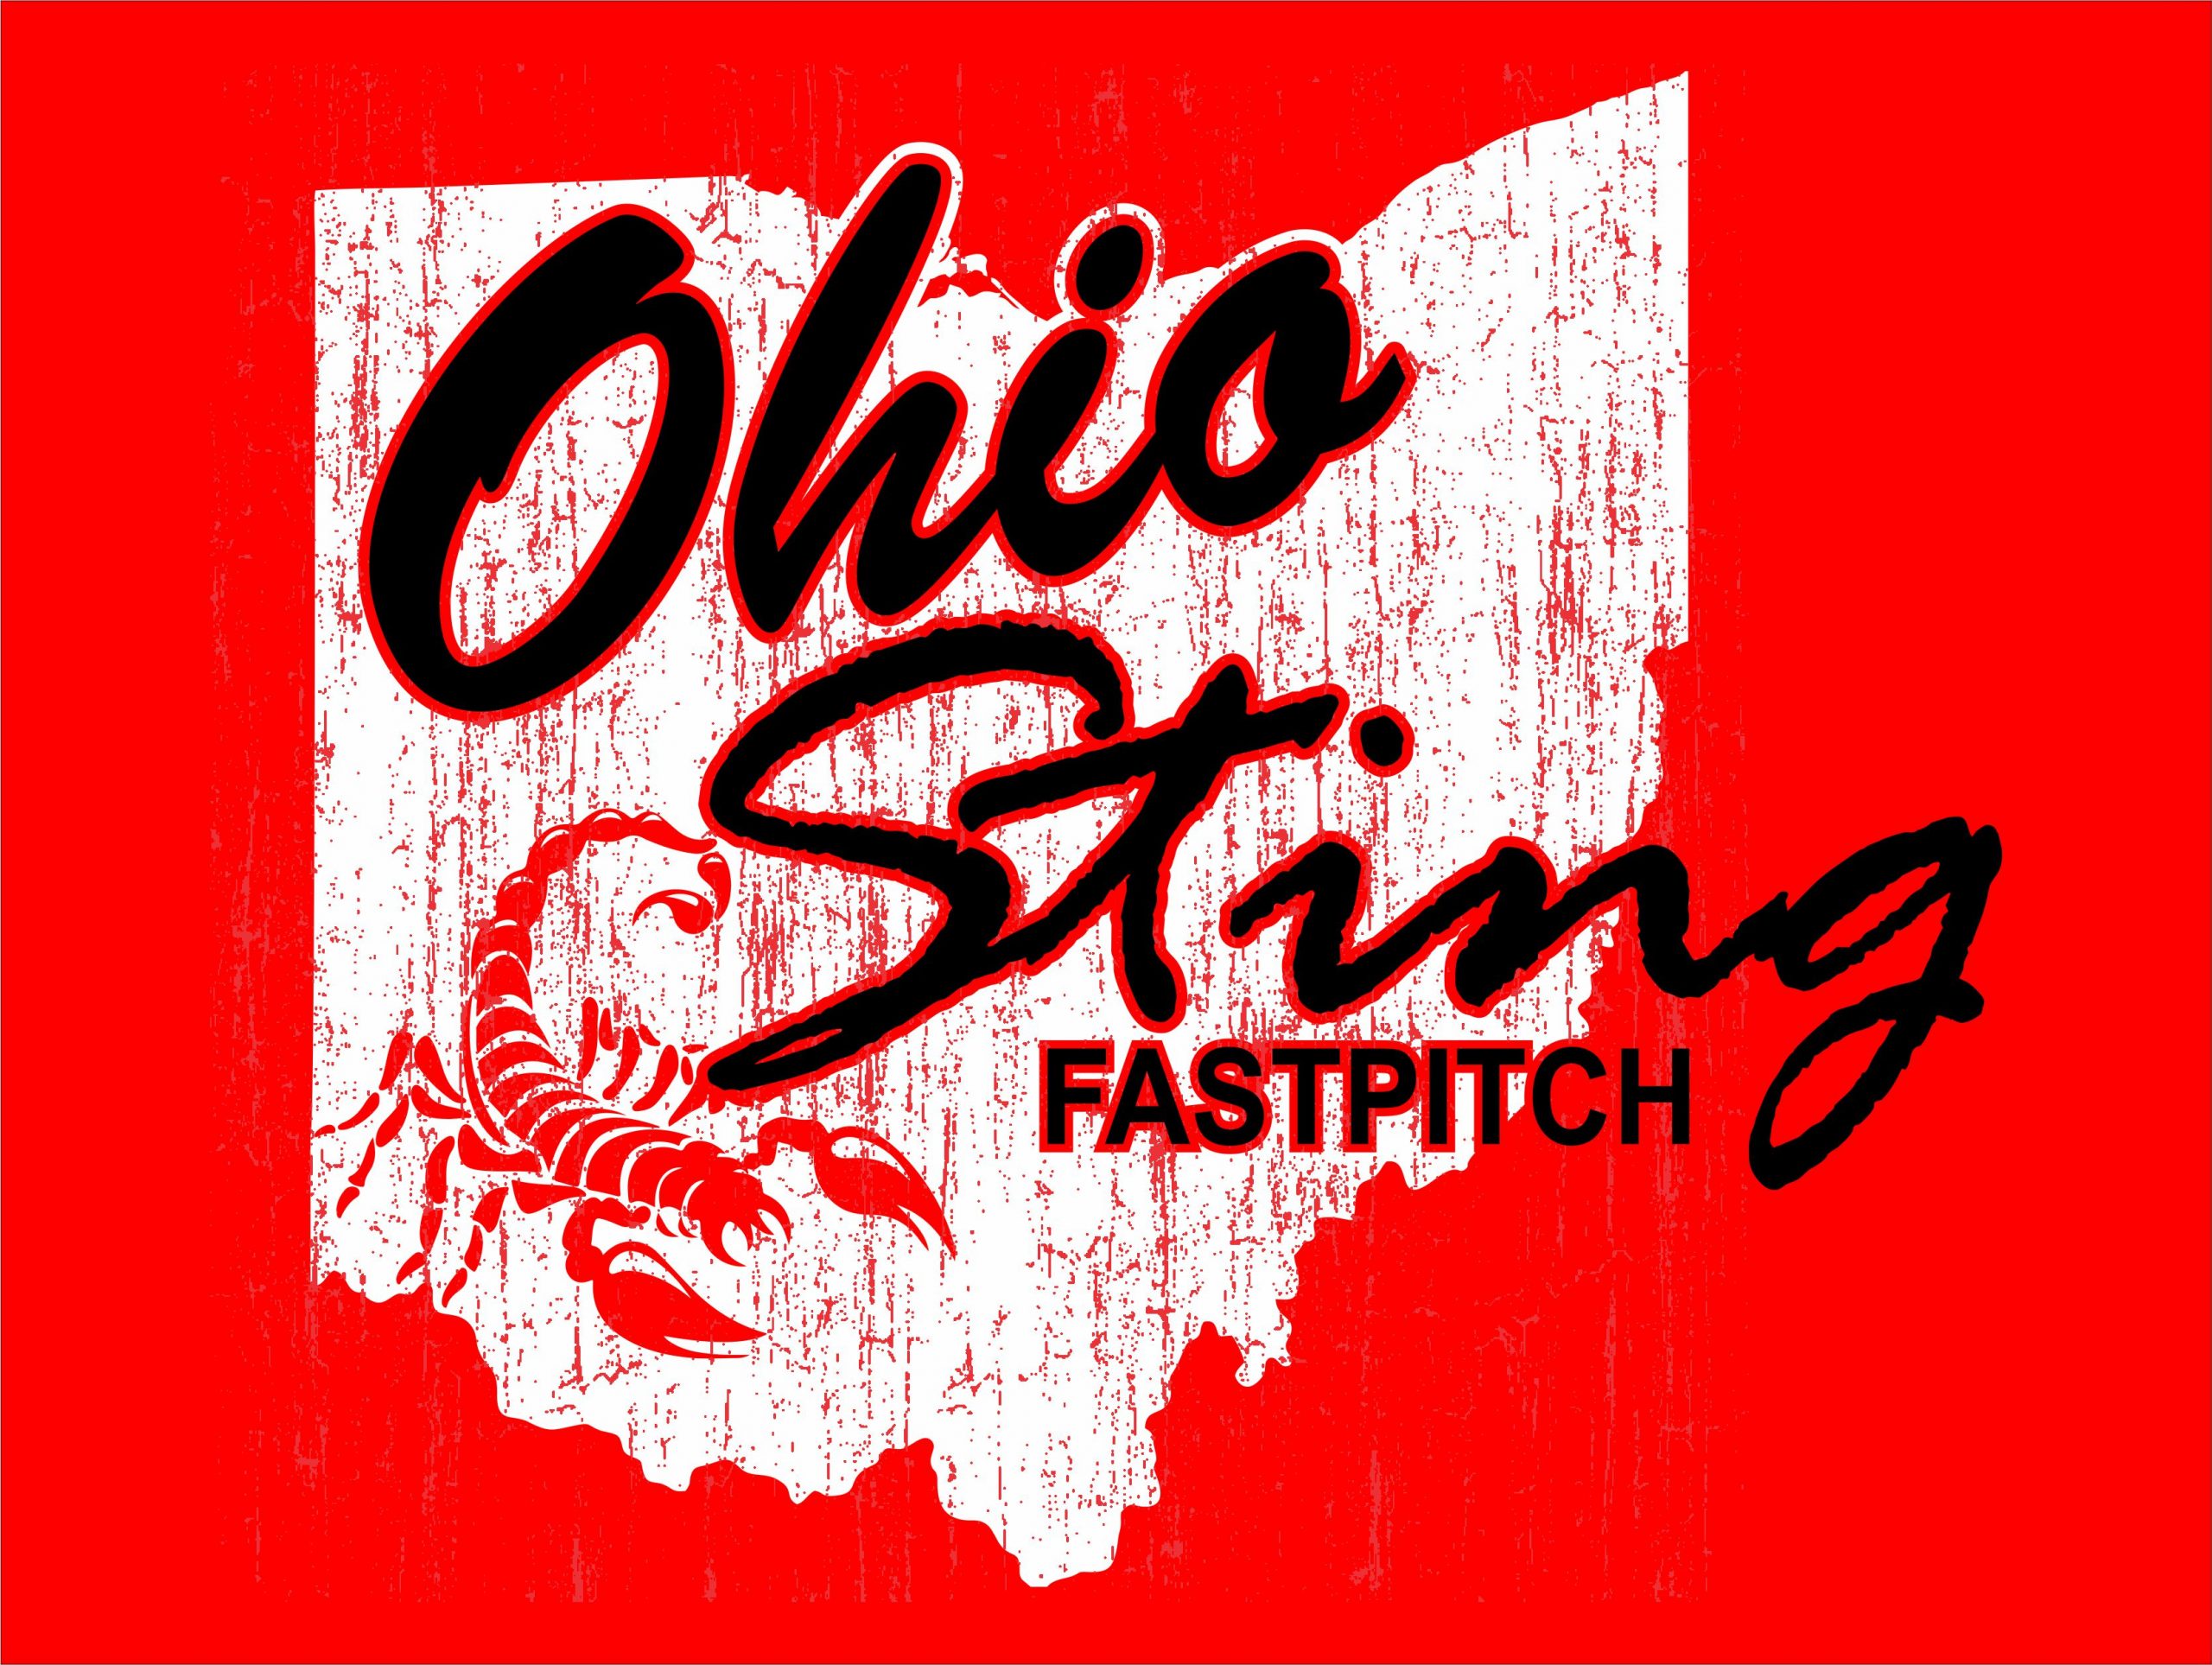 Ohio Sting Fastpitch